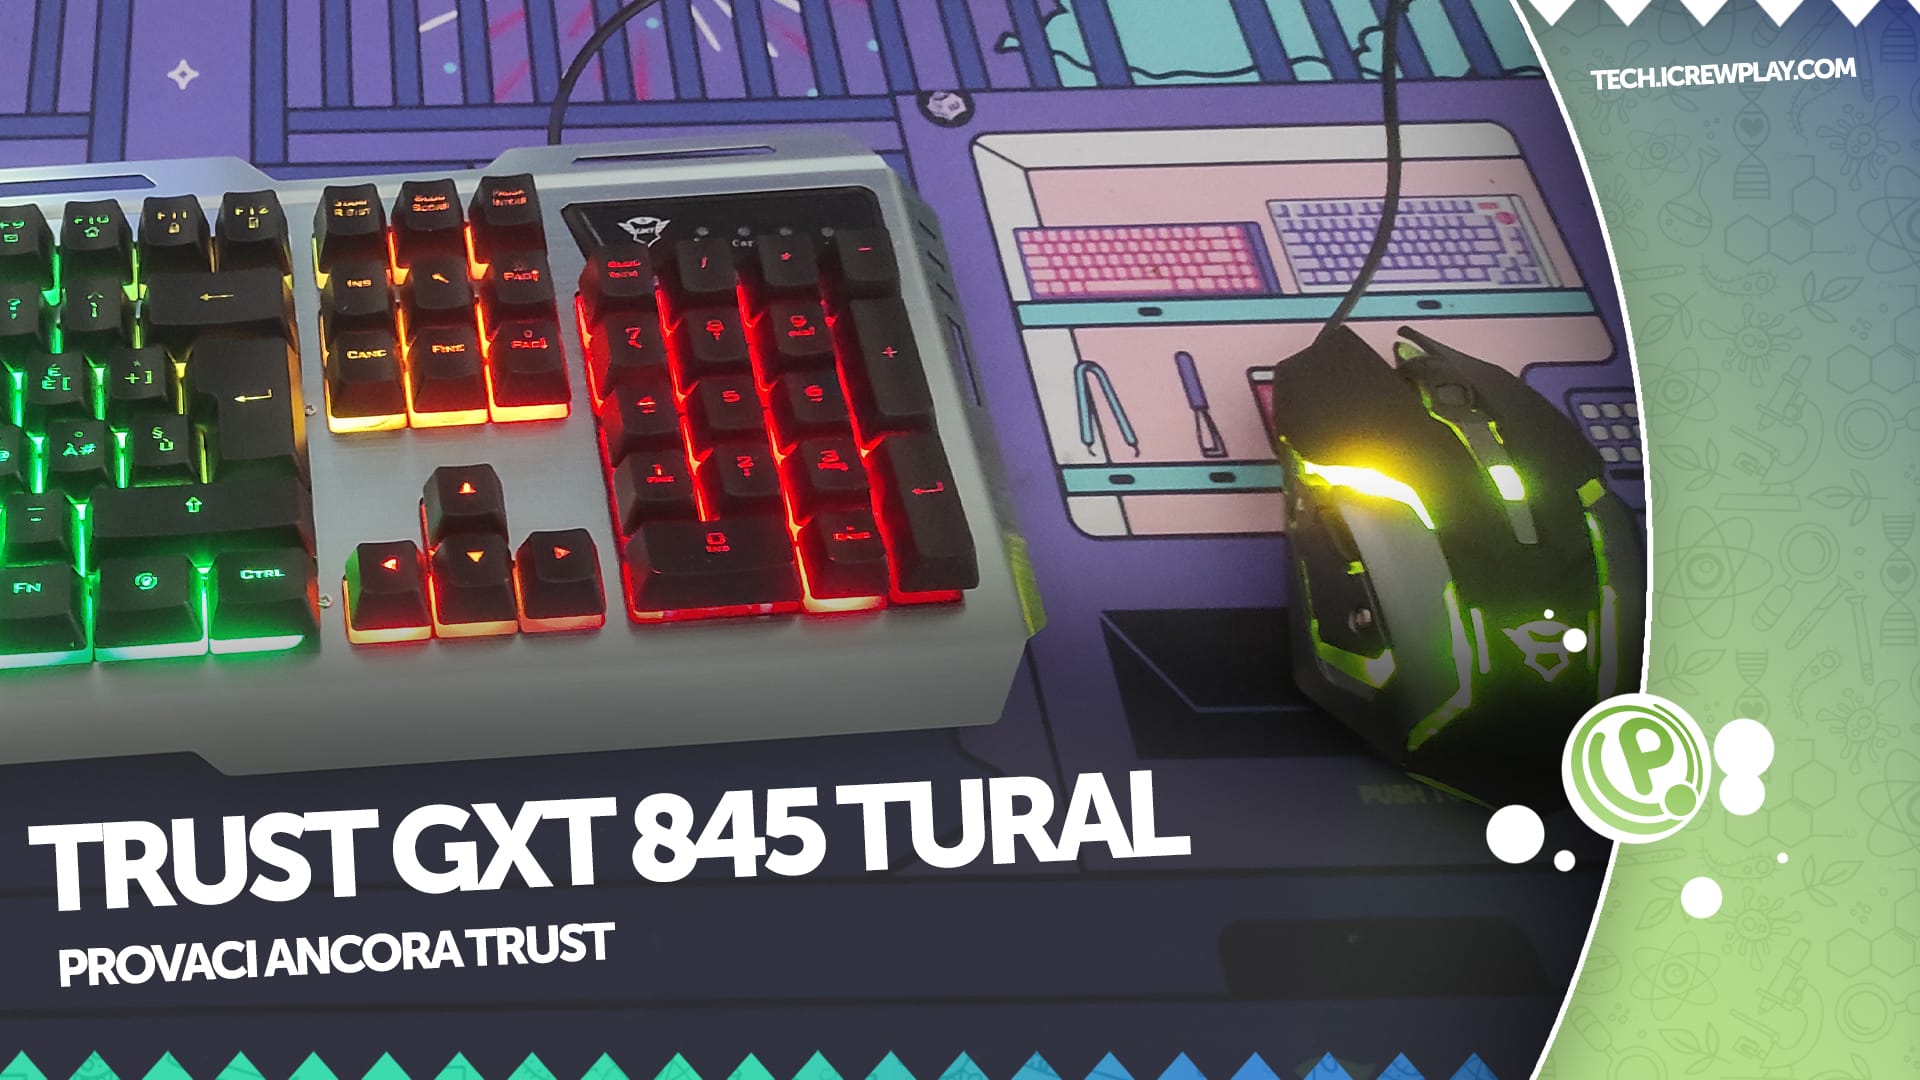 Trust GXT 845 Tural Combo Teclado + Ratón Gaming